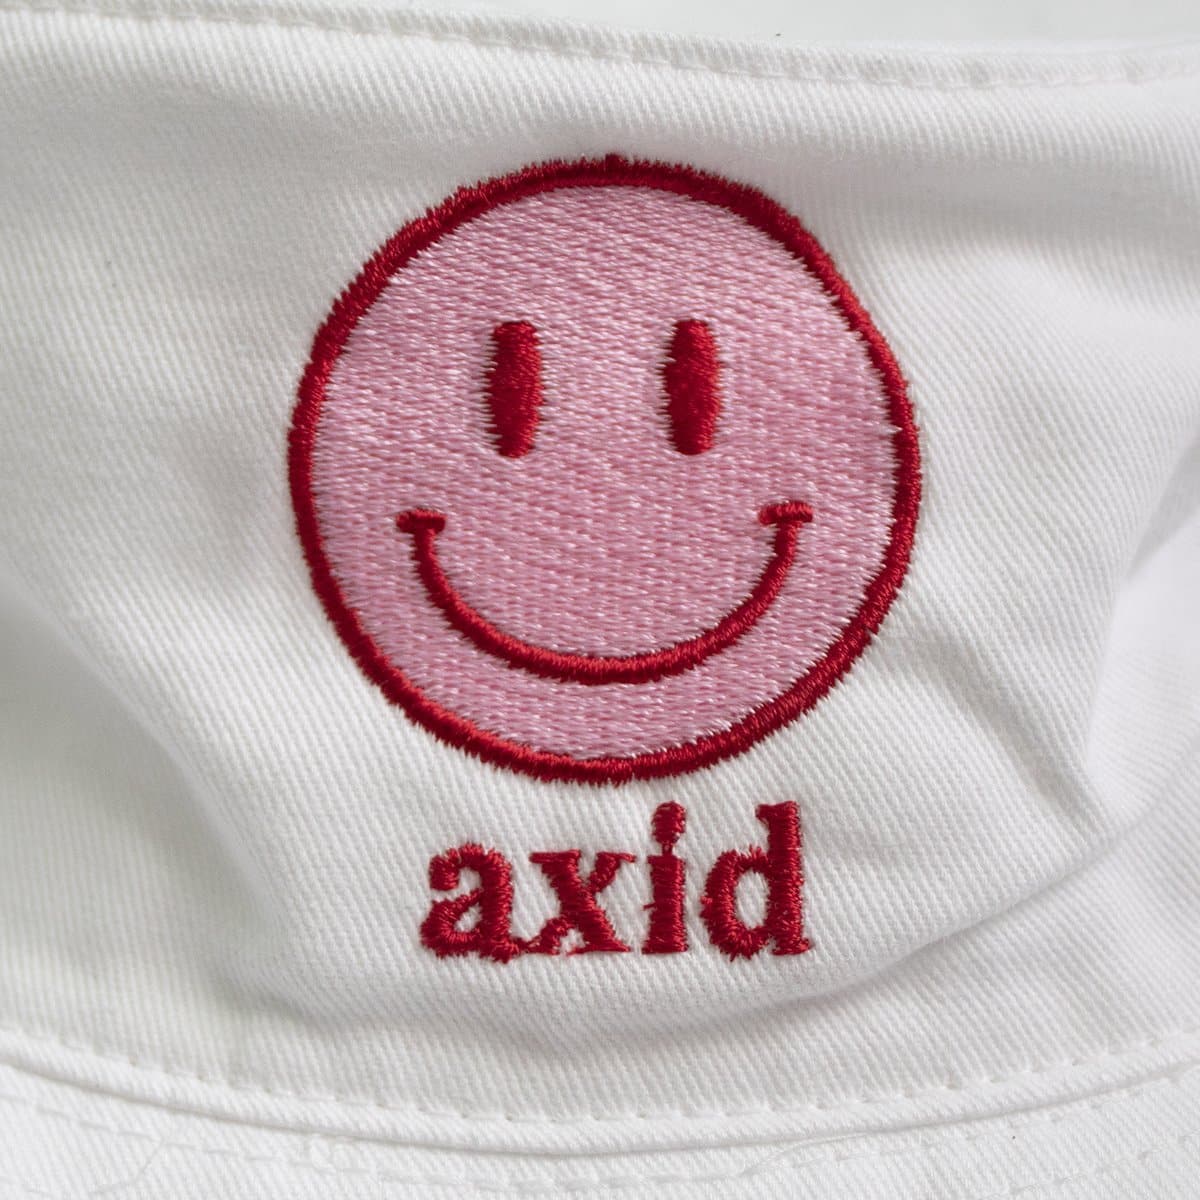 AOII Smiley Bucket Hat | Alpha Omicron Pi | Headwear > Bucket hats